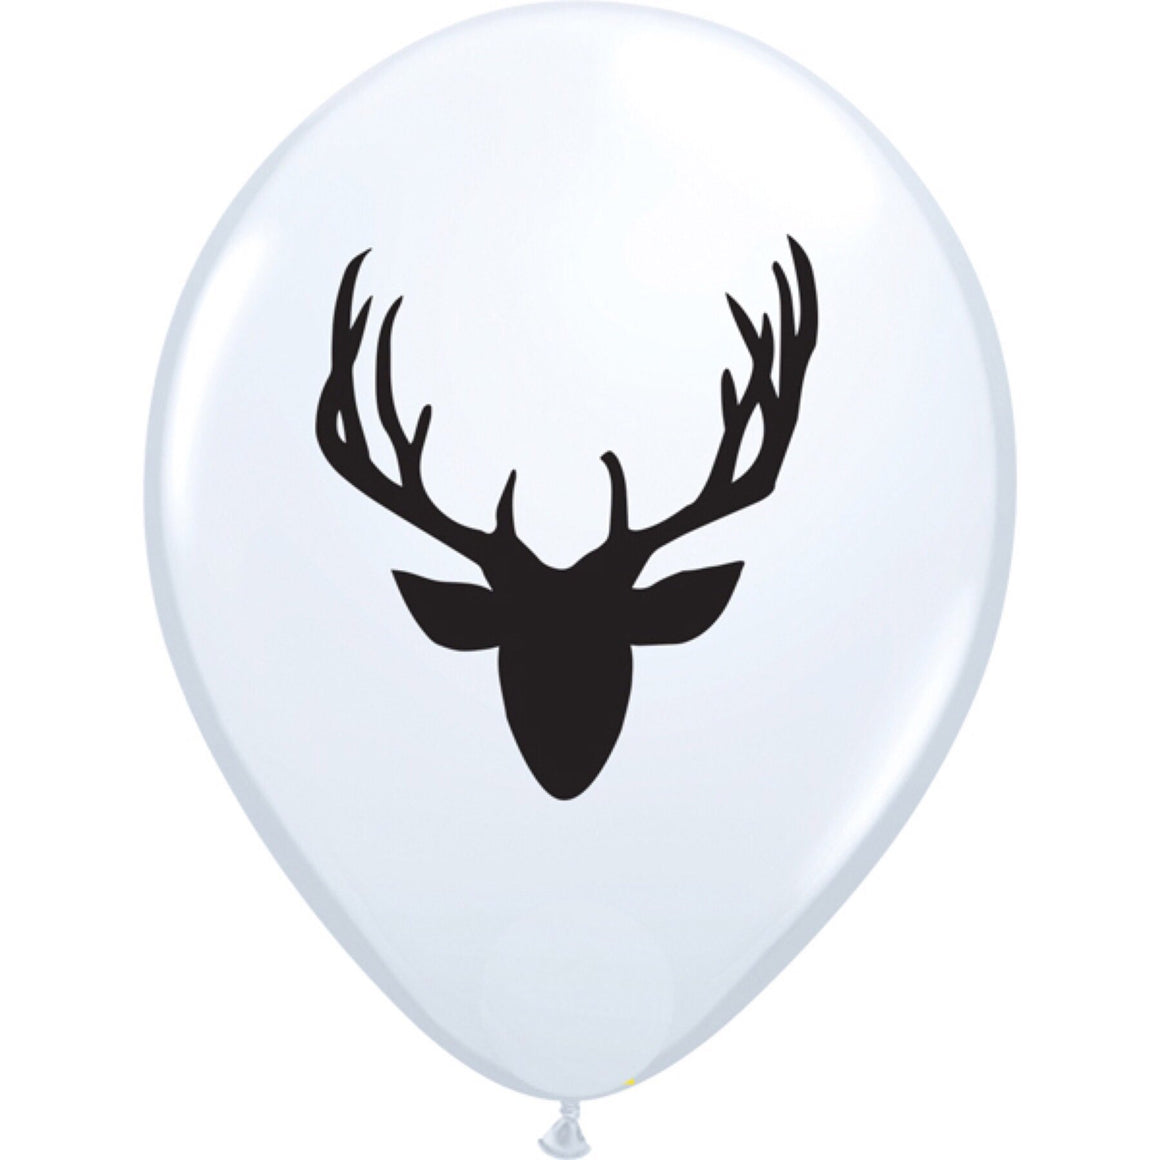 BALLOON BAR - ANIMAL STAGS HEAD BLACK ON WHITE 11", Balloons, QUALATEX - Bon + Co. Party Studio